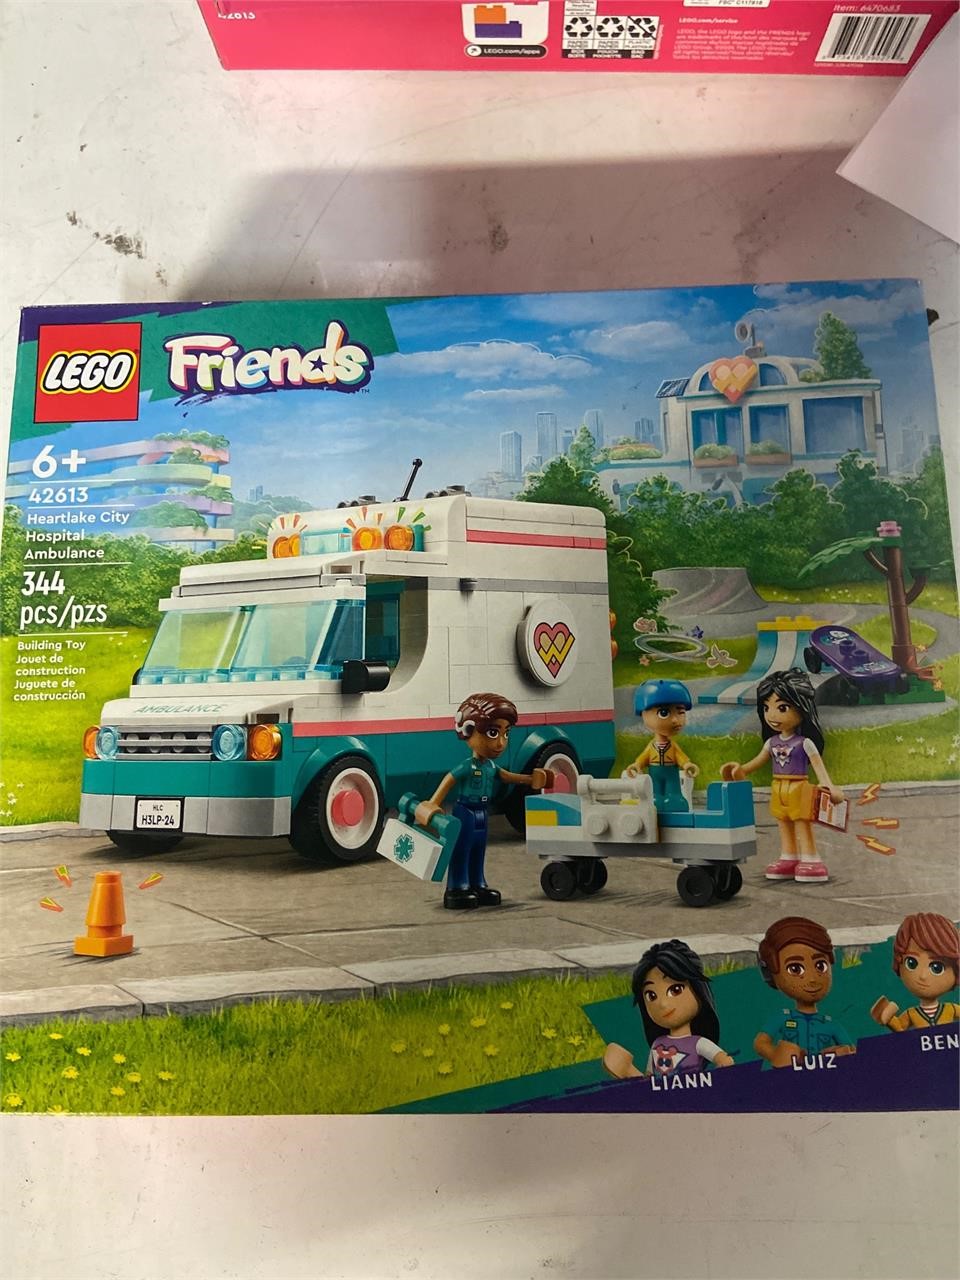 $34 Lego 42613 friends ambulance